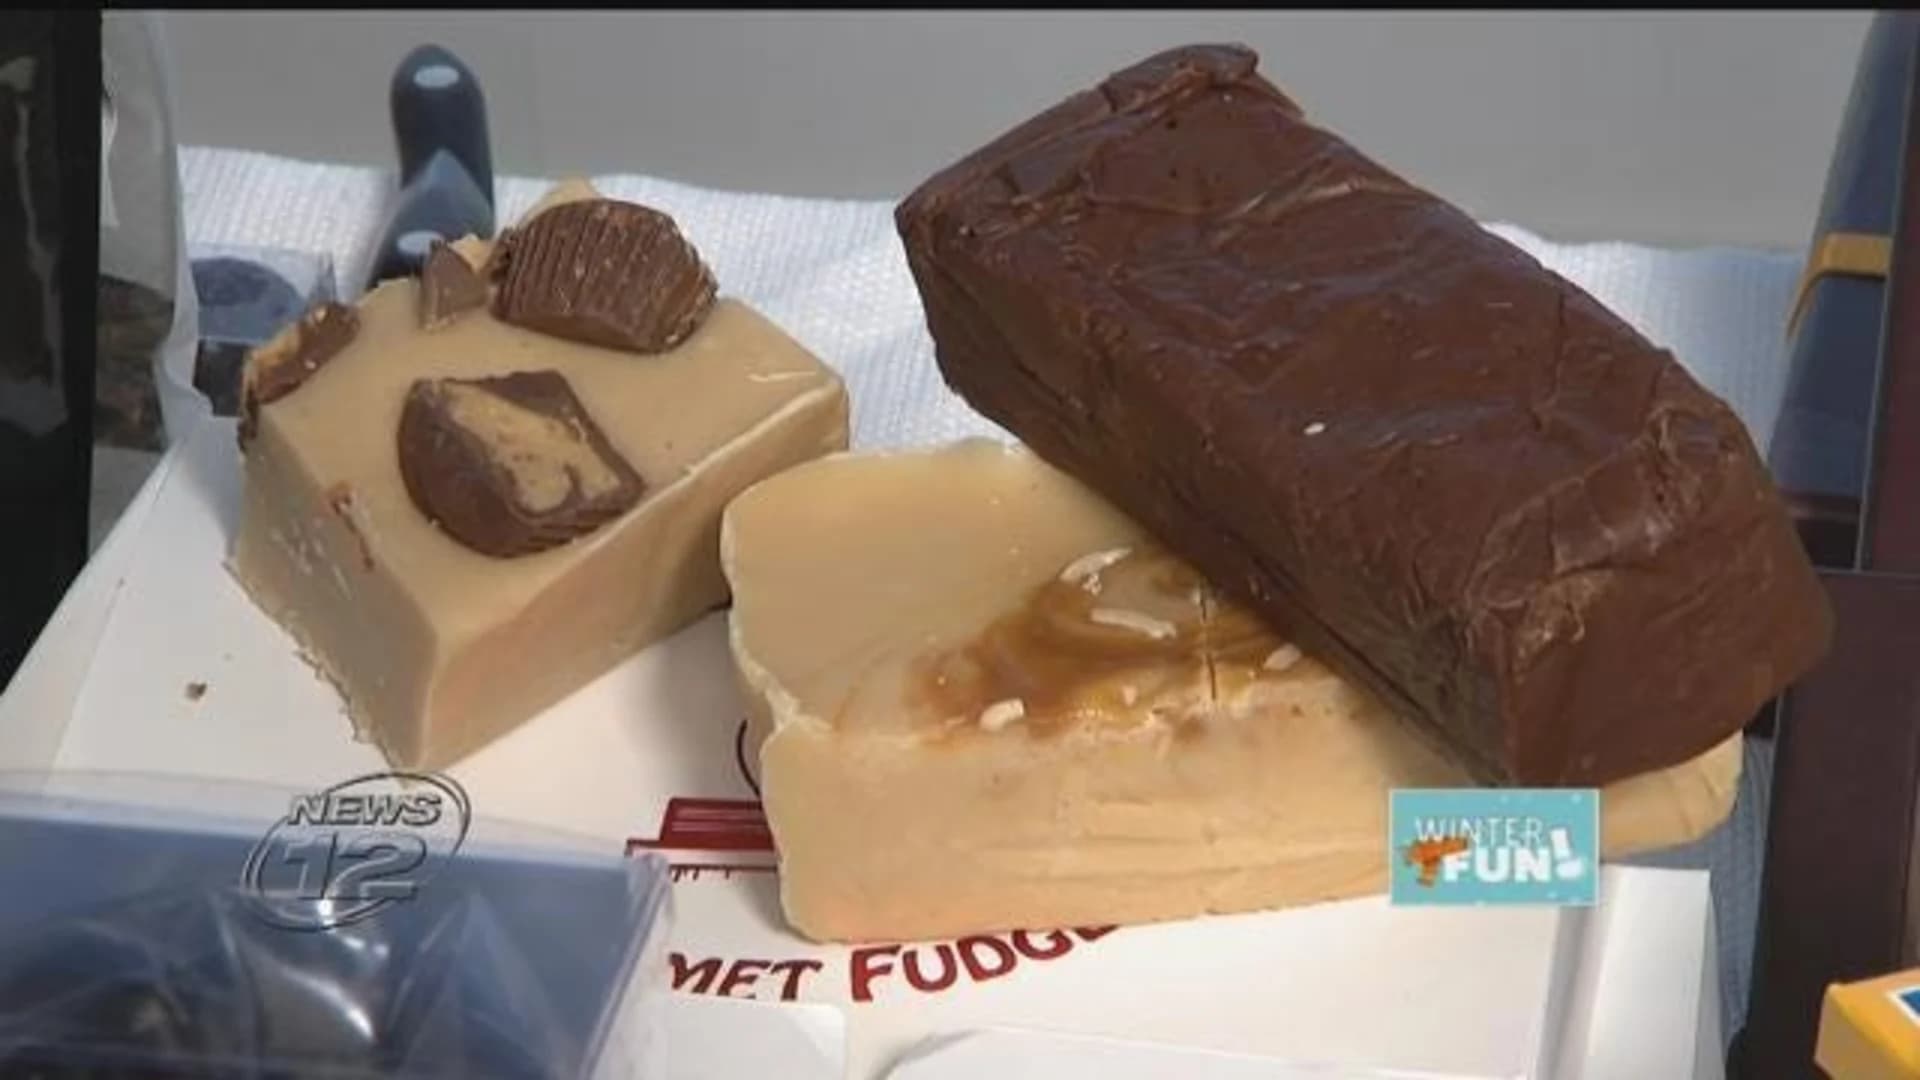 News 12 previews The Chocolate Expo